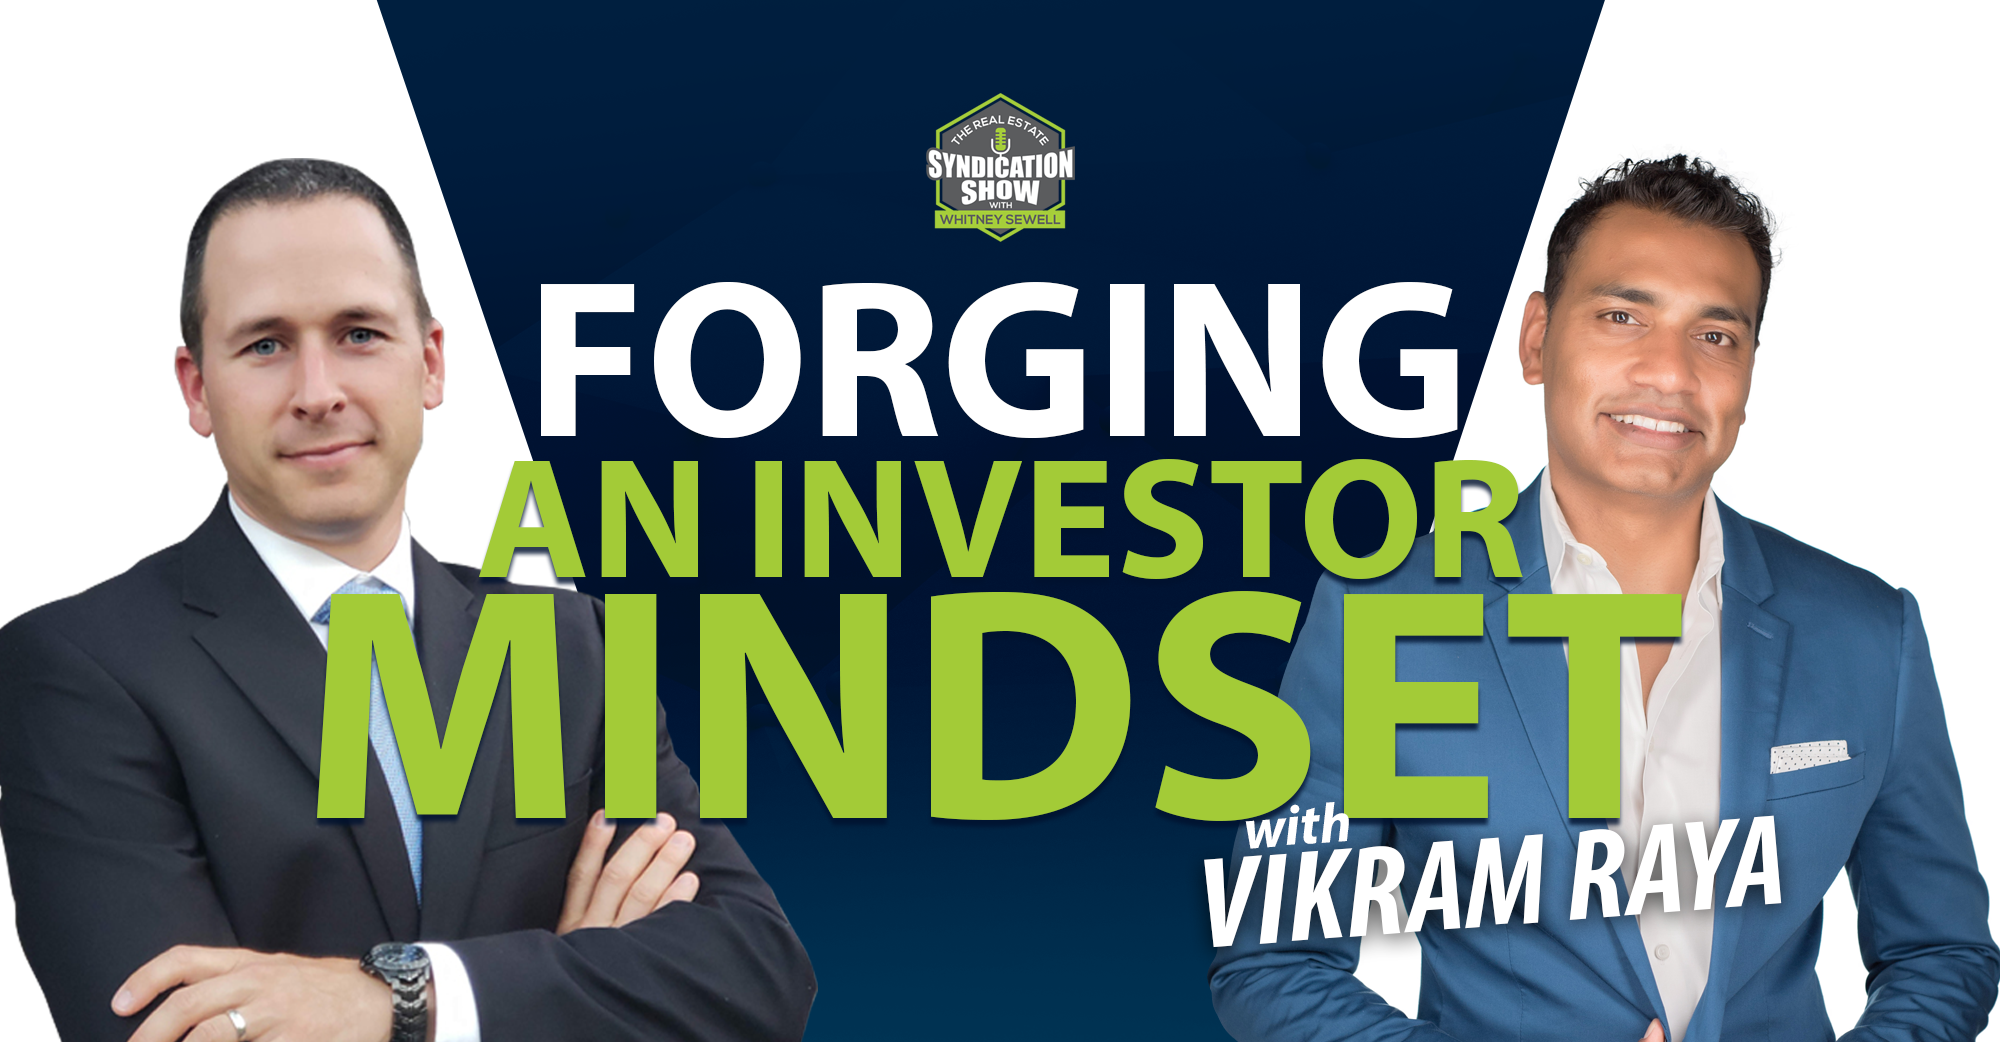 Forging an Investor Mindset with Vikram Raya